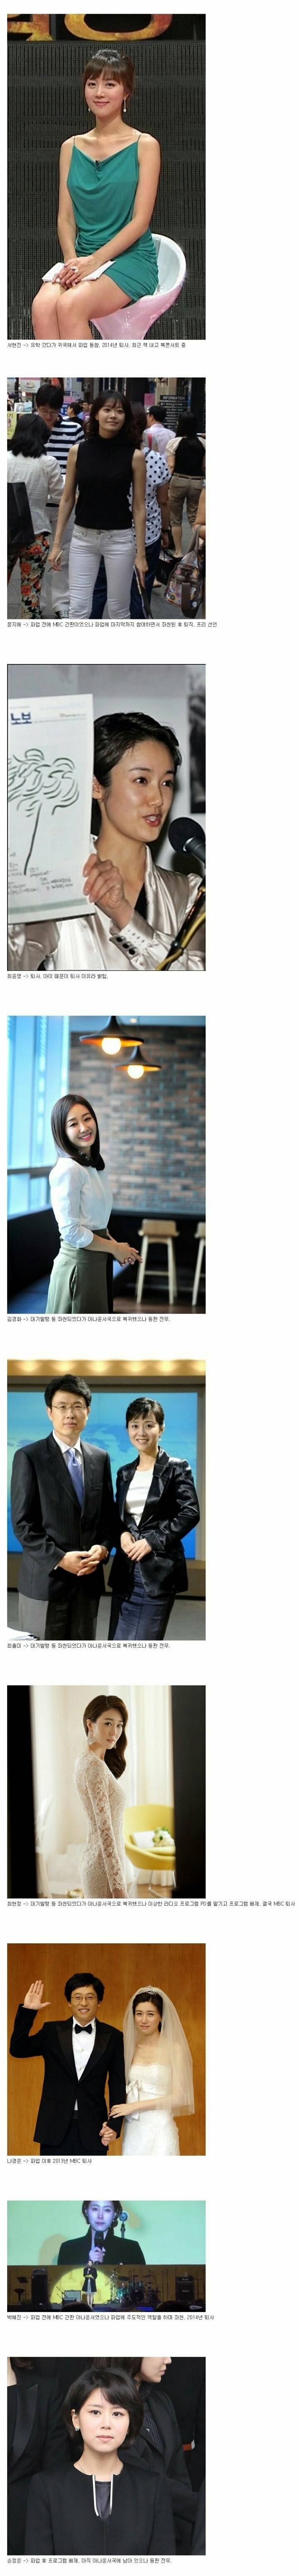 MBC 여자 아나운서들의 파업 후 | 인스티즈